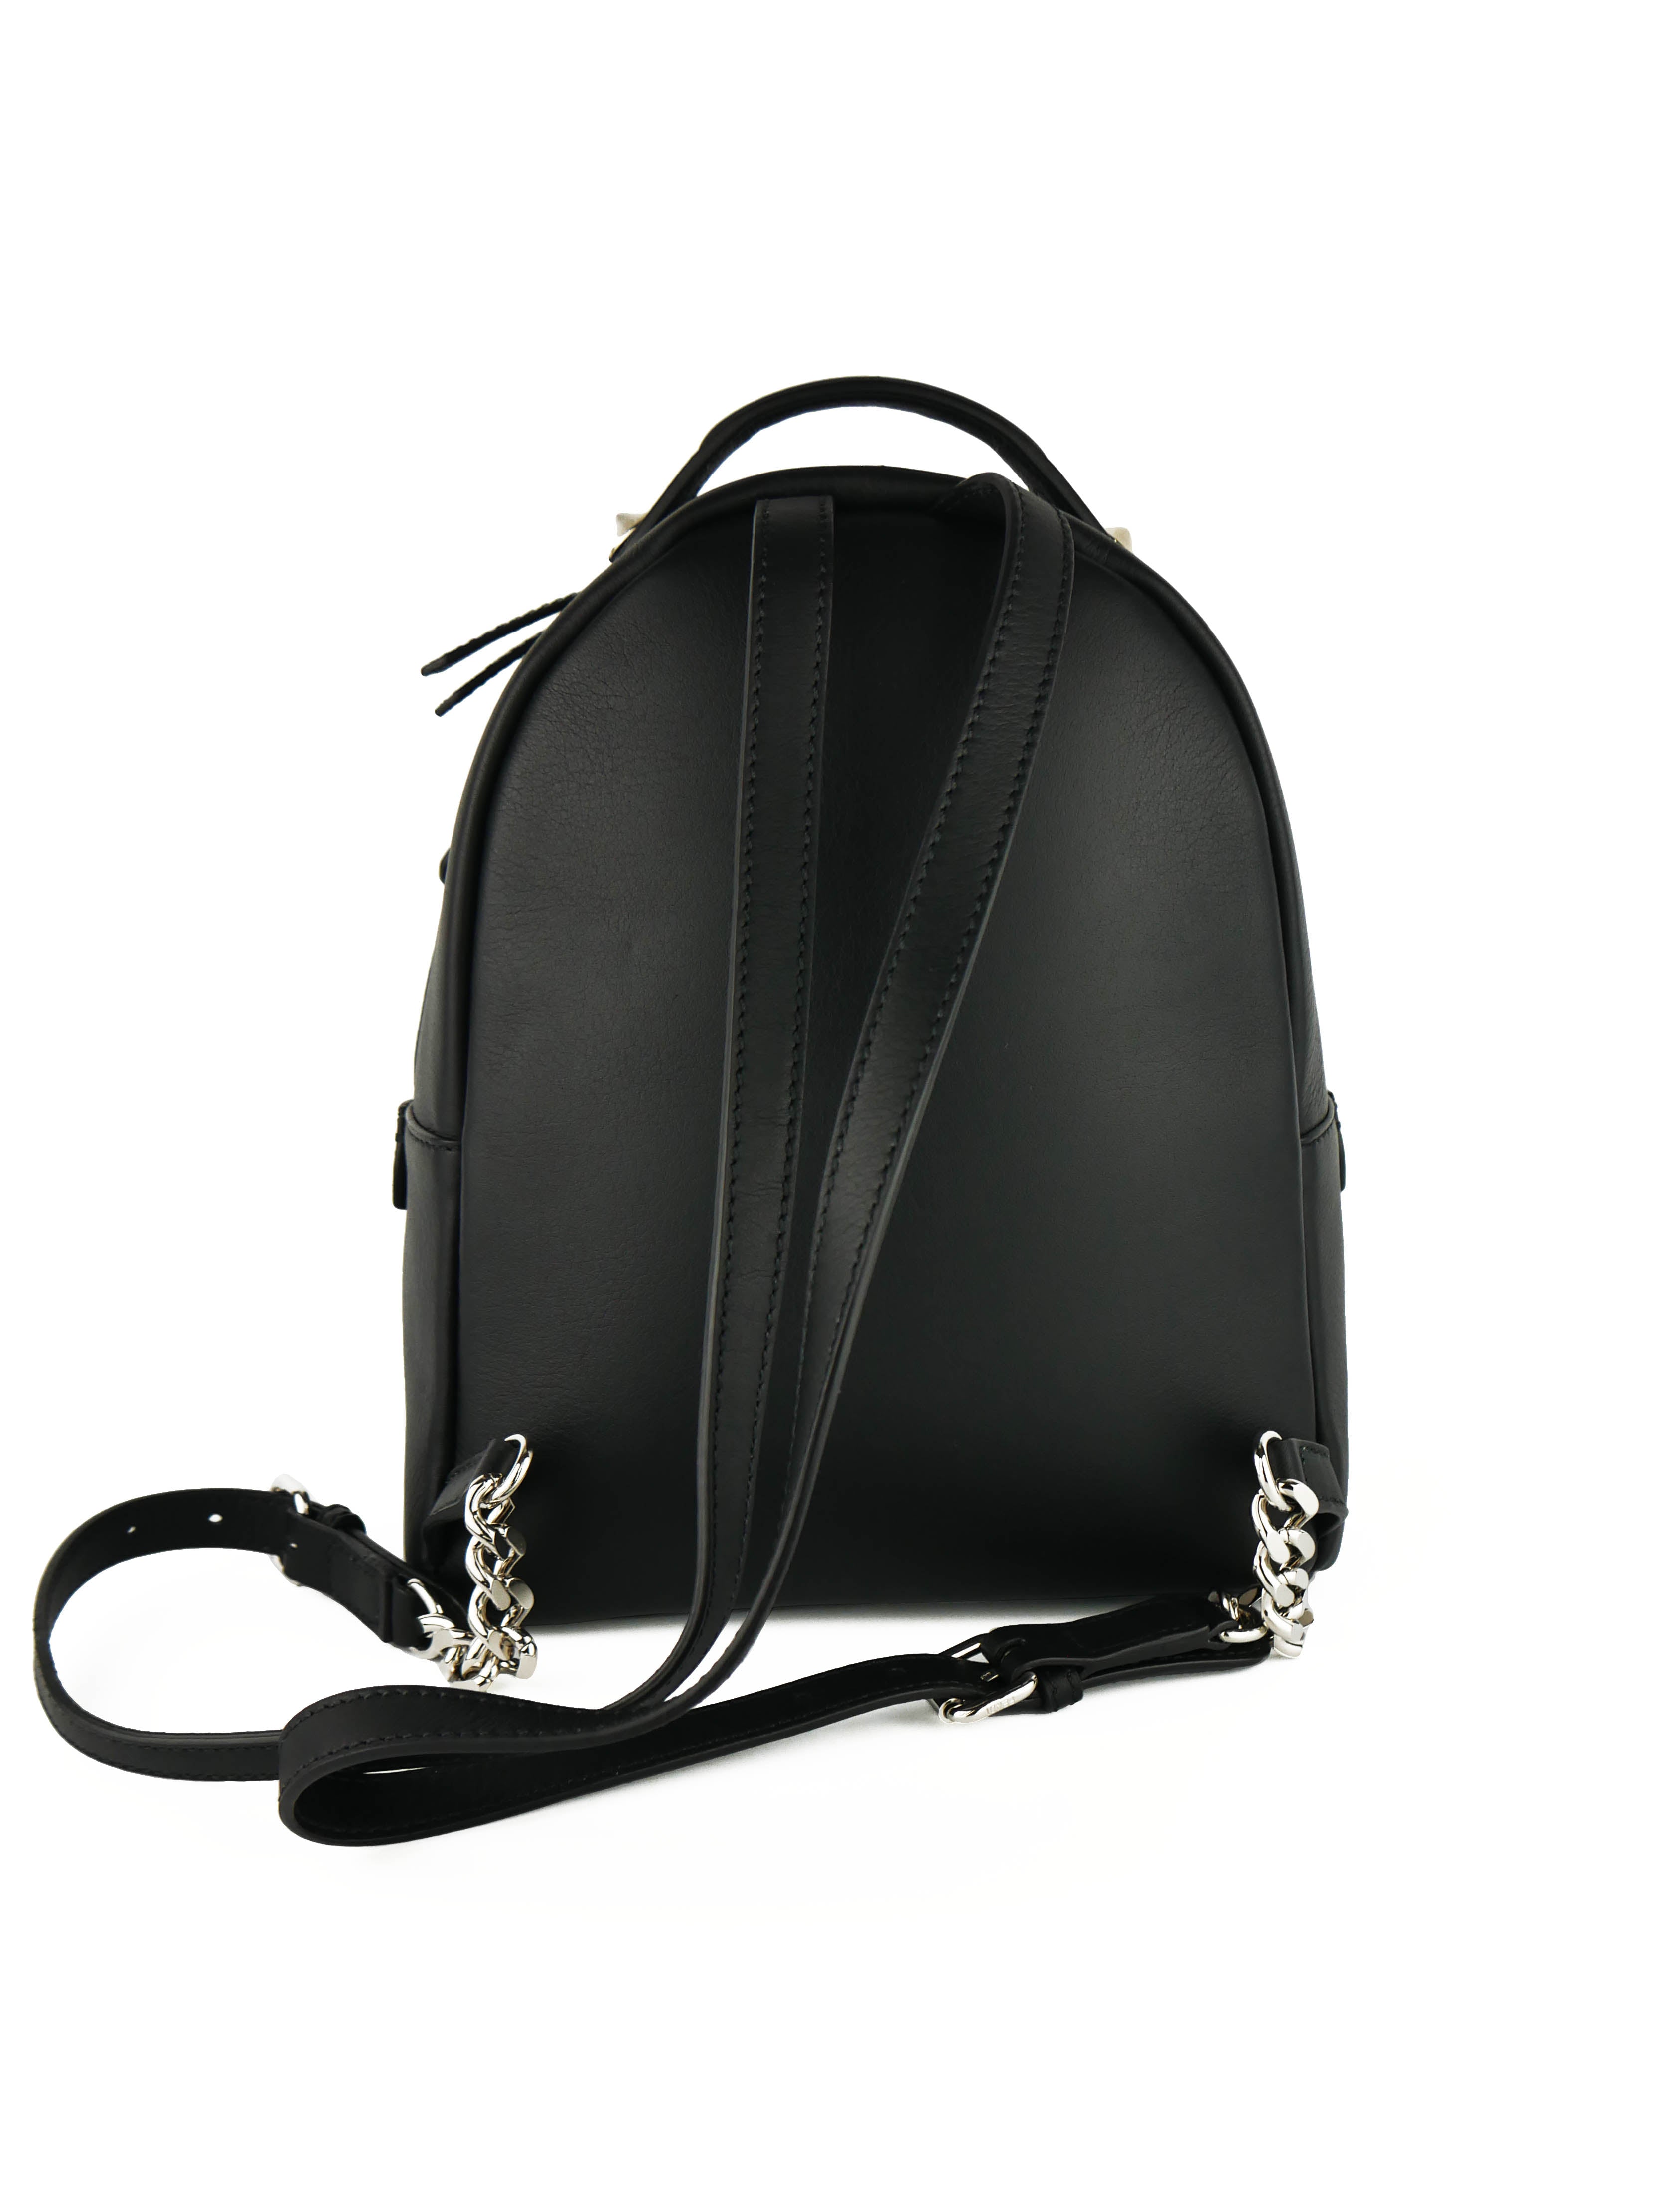 fendi-black-backpack-9.jpg